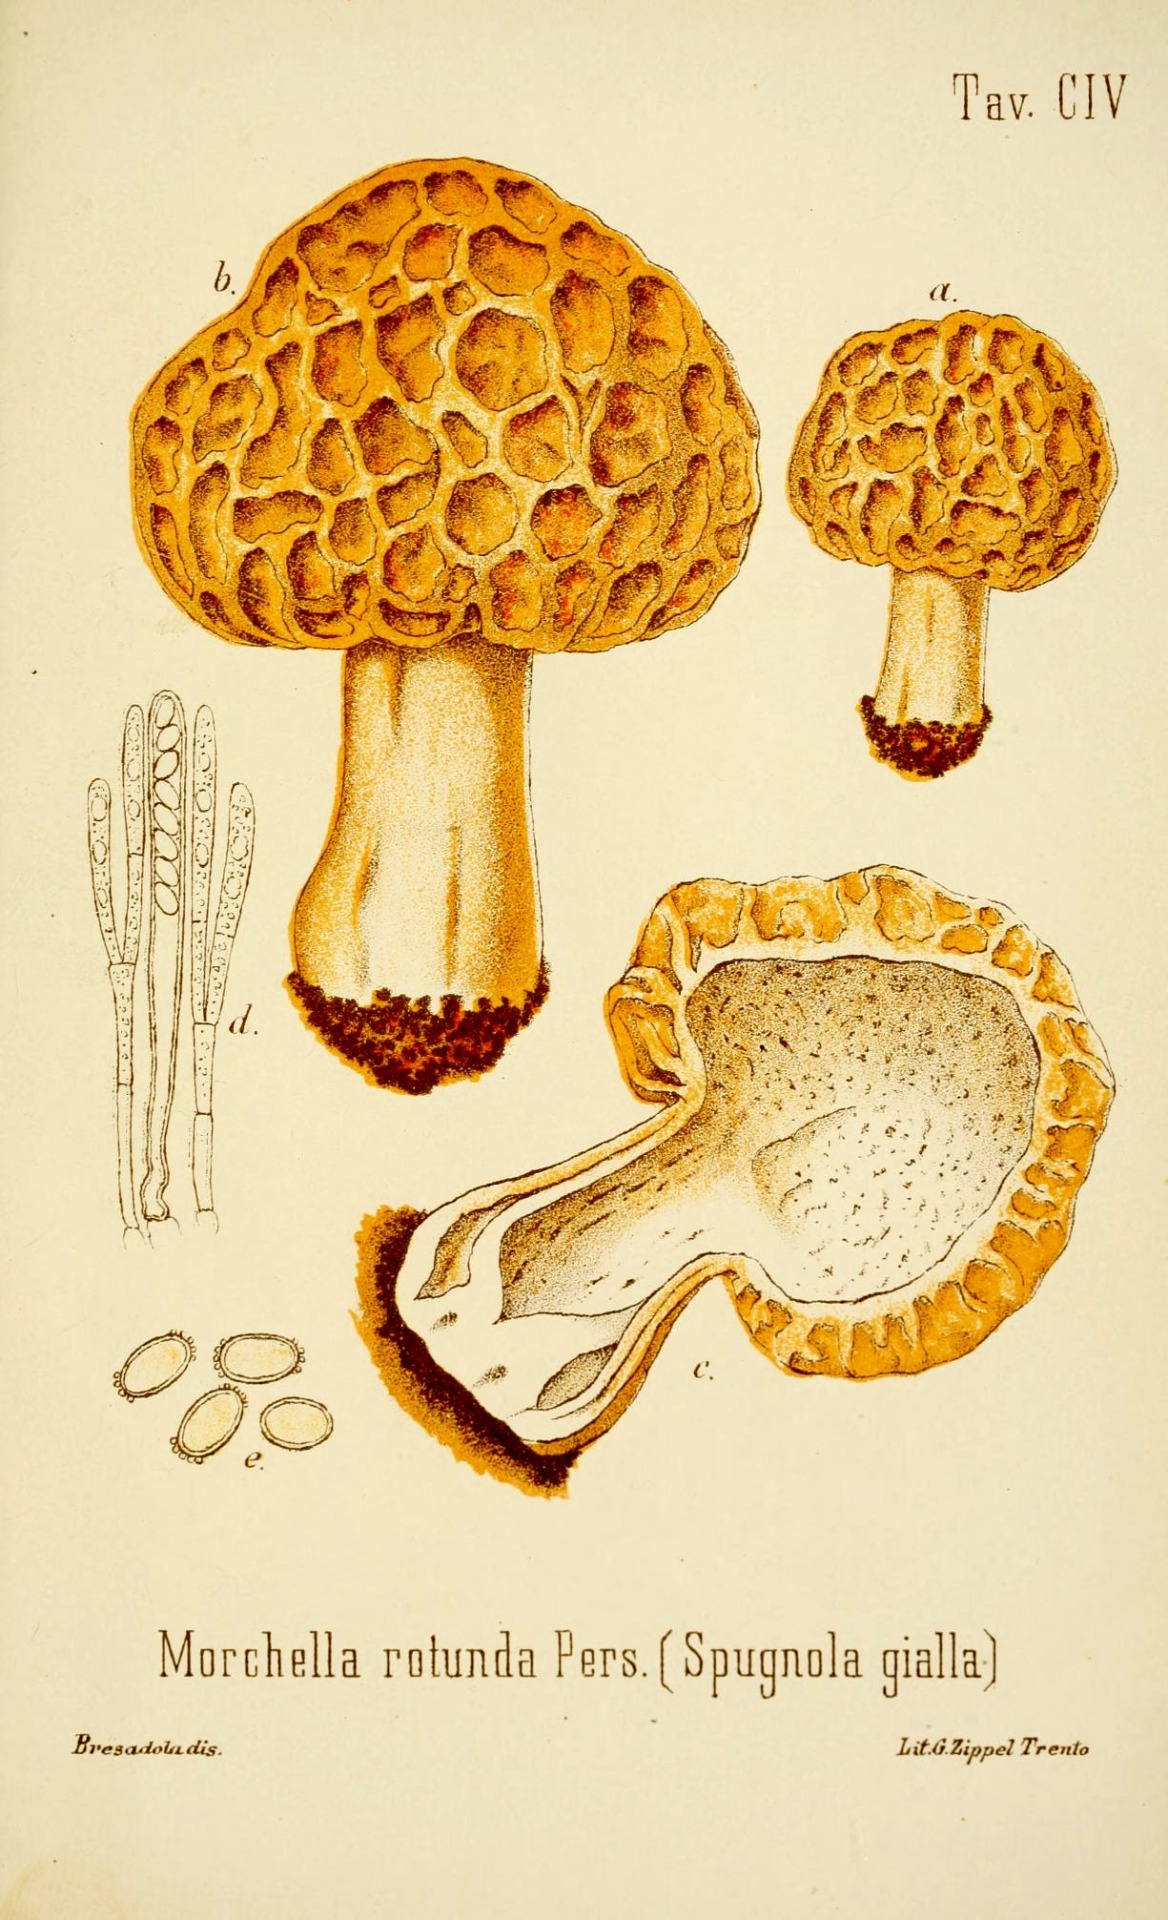 Scientific Illustration Wapiti The Edible Mushrooms And Poisonous